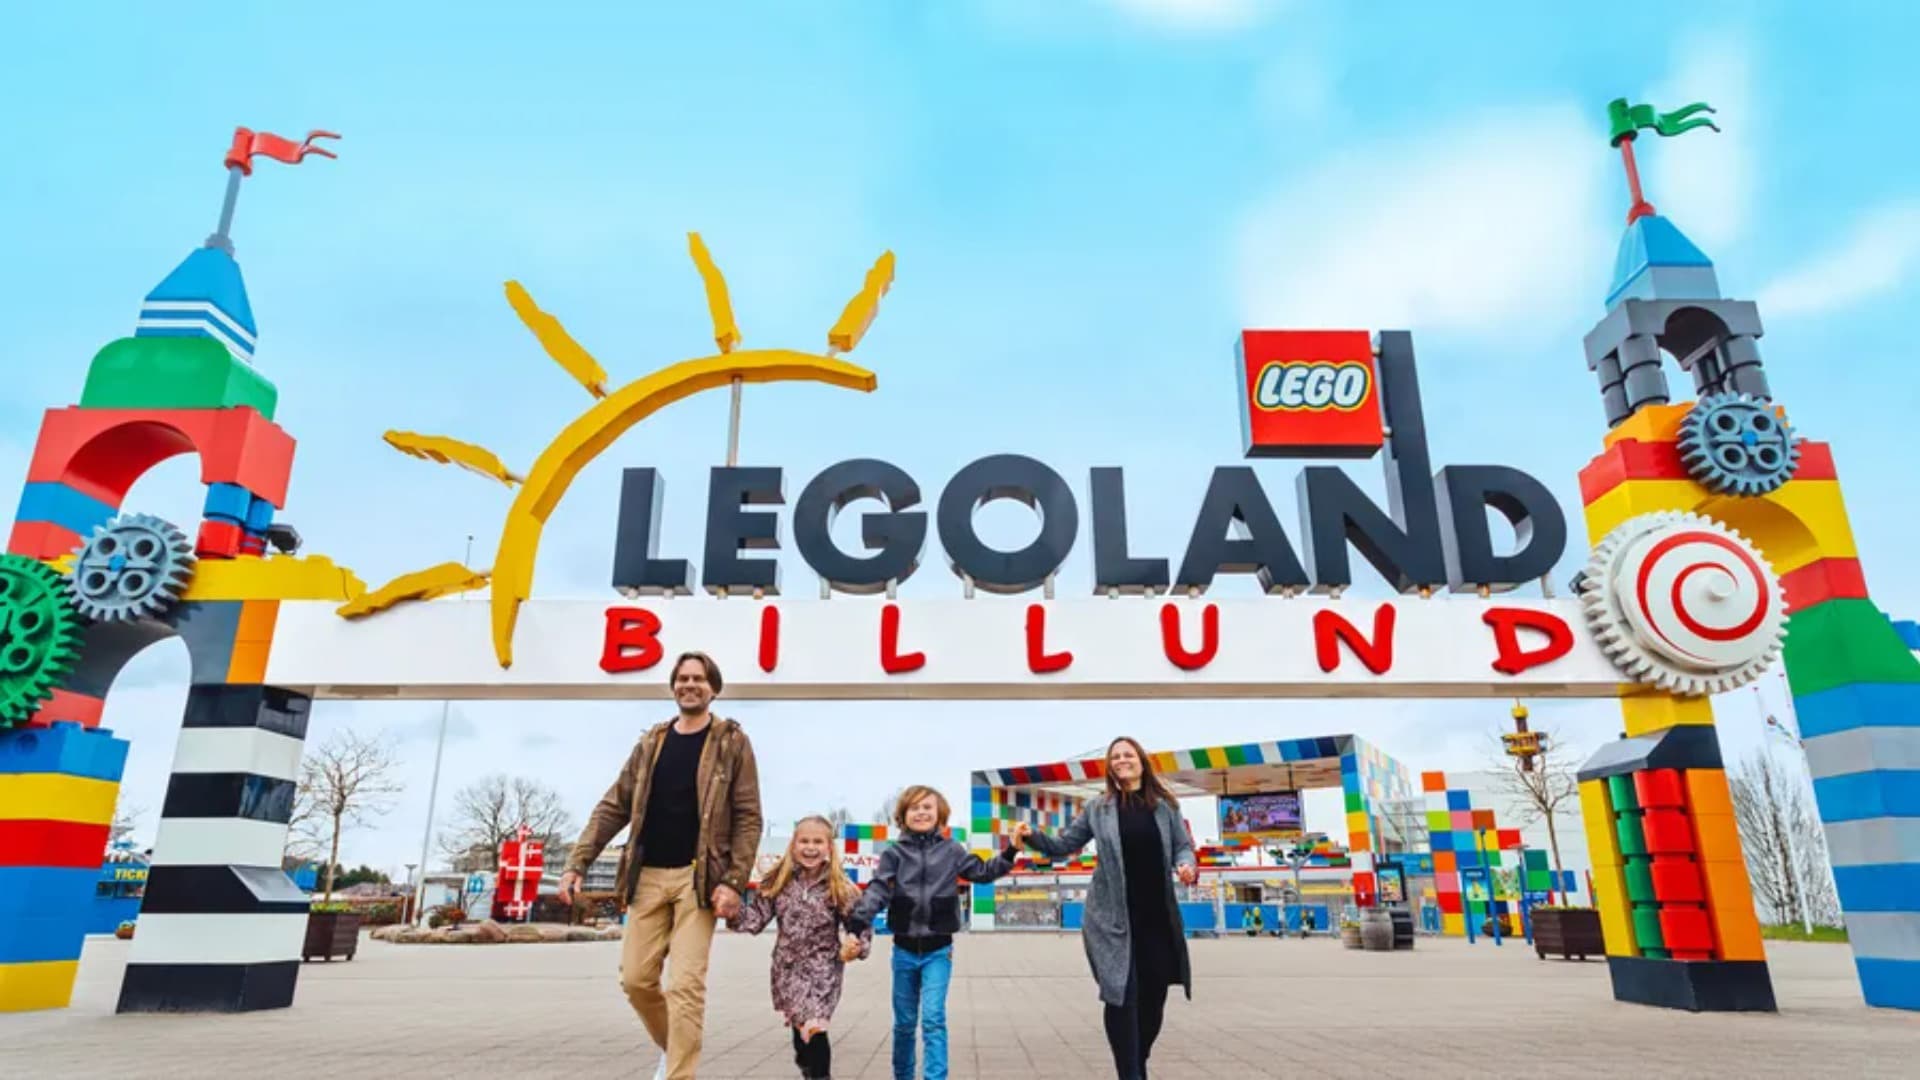 Legoland Billund © legoland.dk